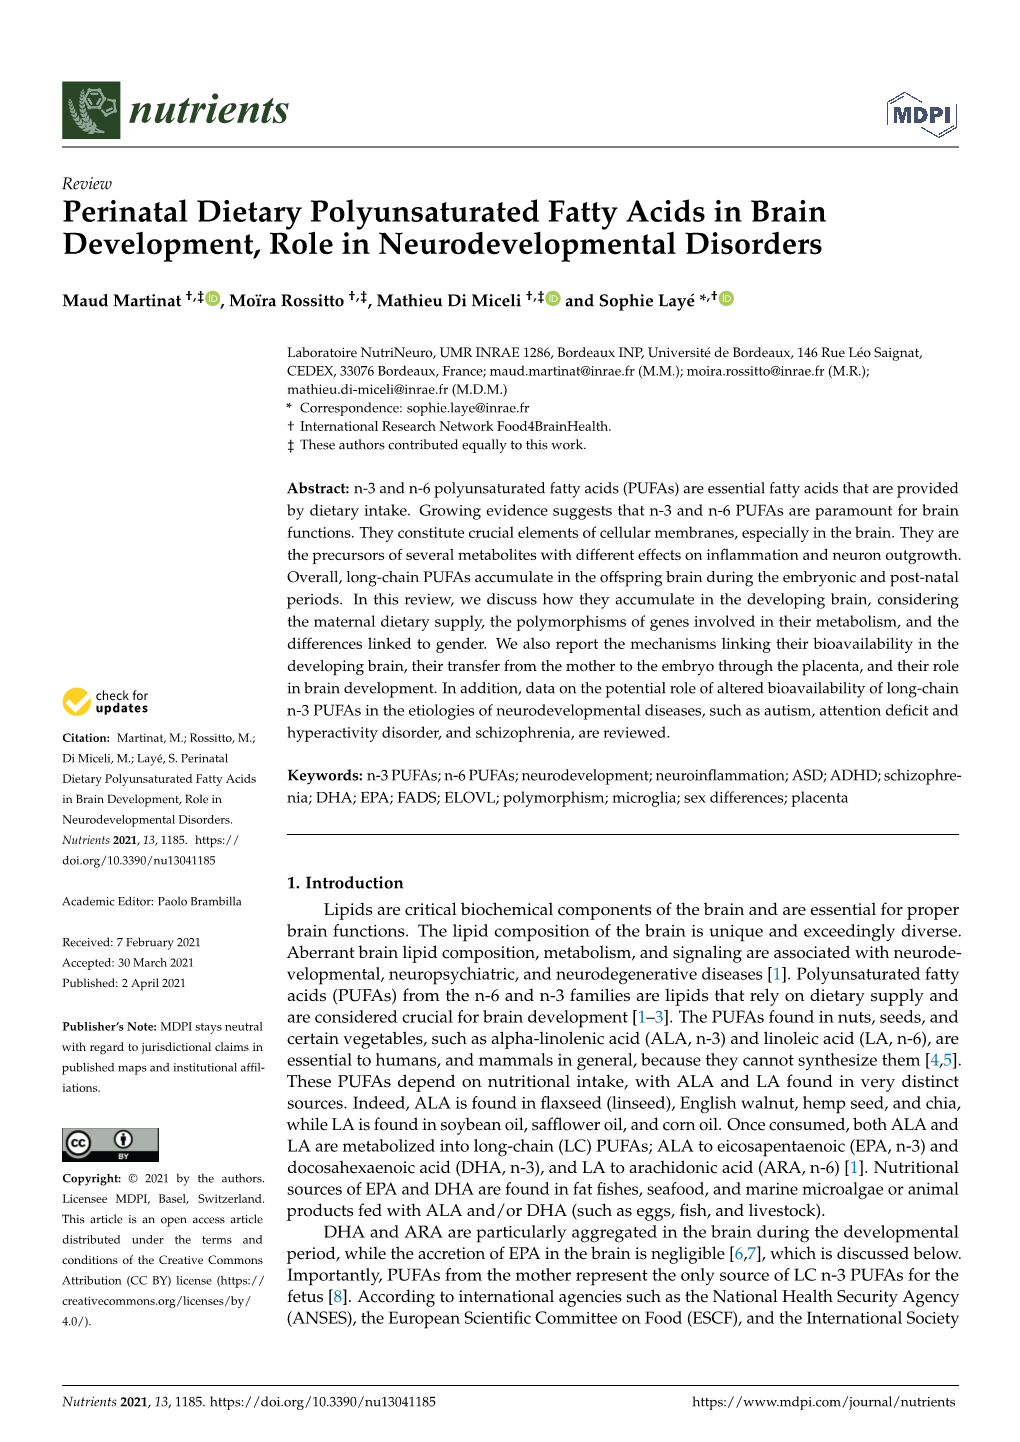 Perinatal Dietary Polyunsaturated Fatty Acids in Brain Development, Role in Neurodevelopmental Disorders